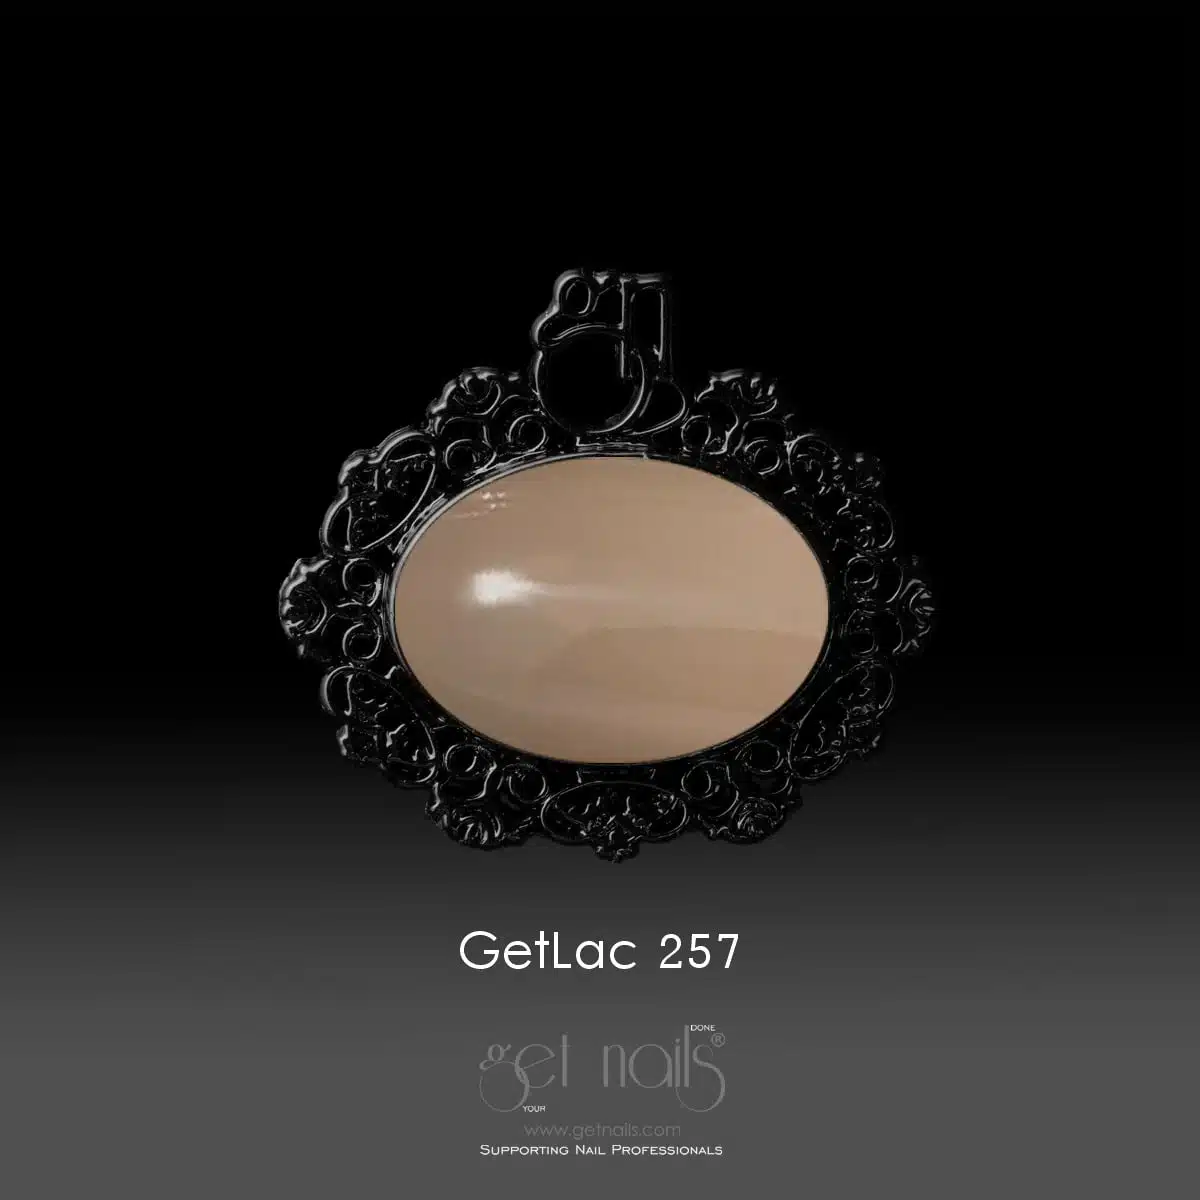 Get Nails Austria - GetLac 257 15g